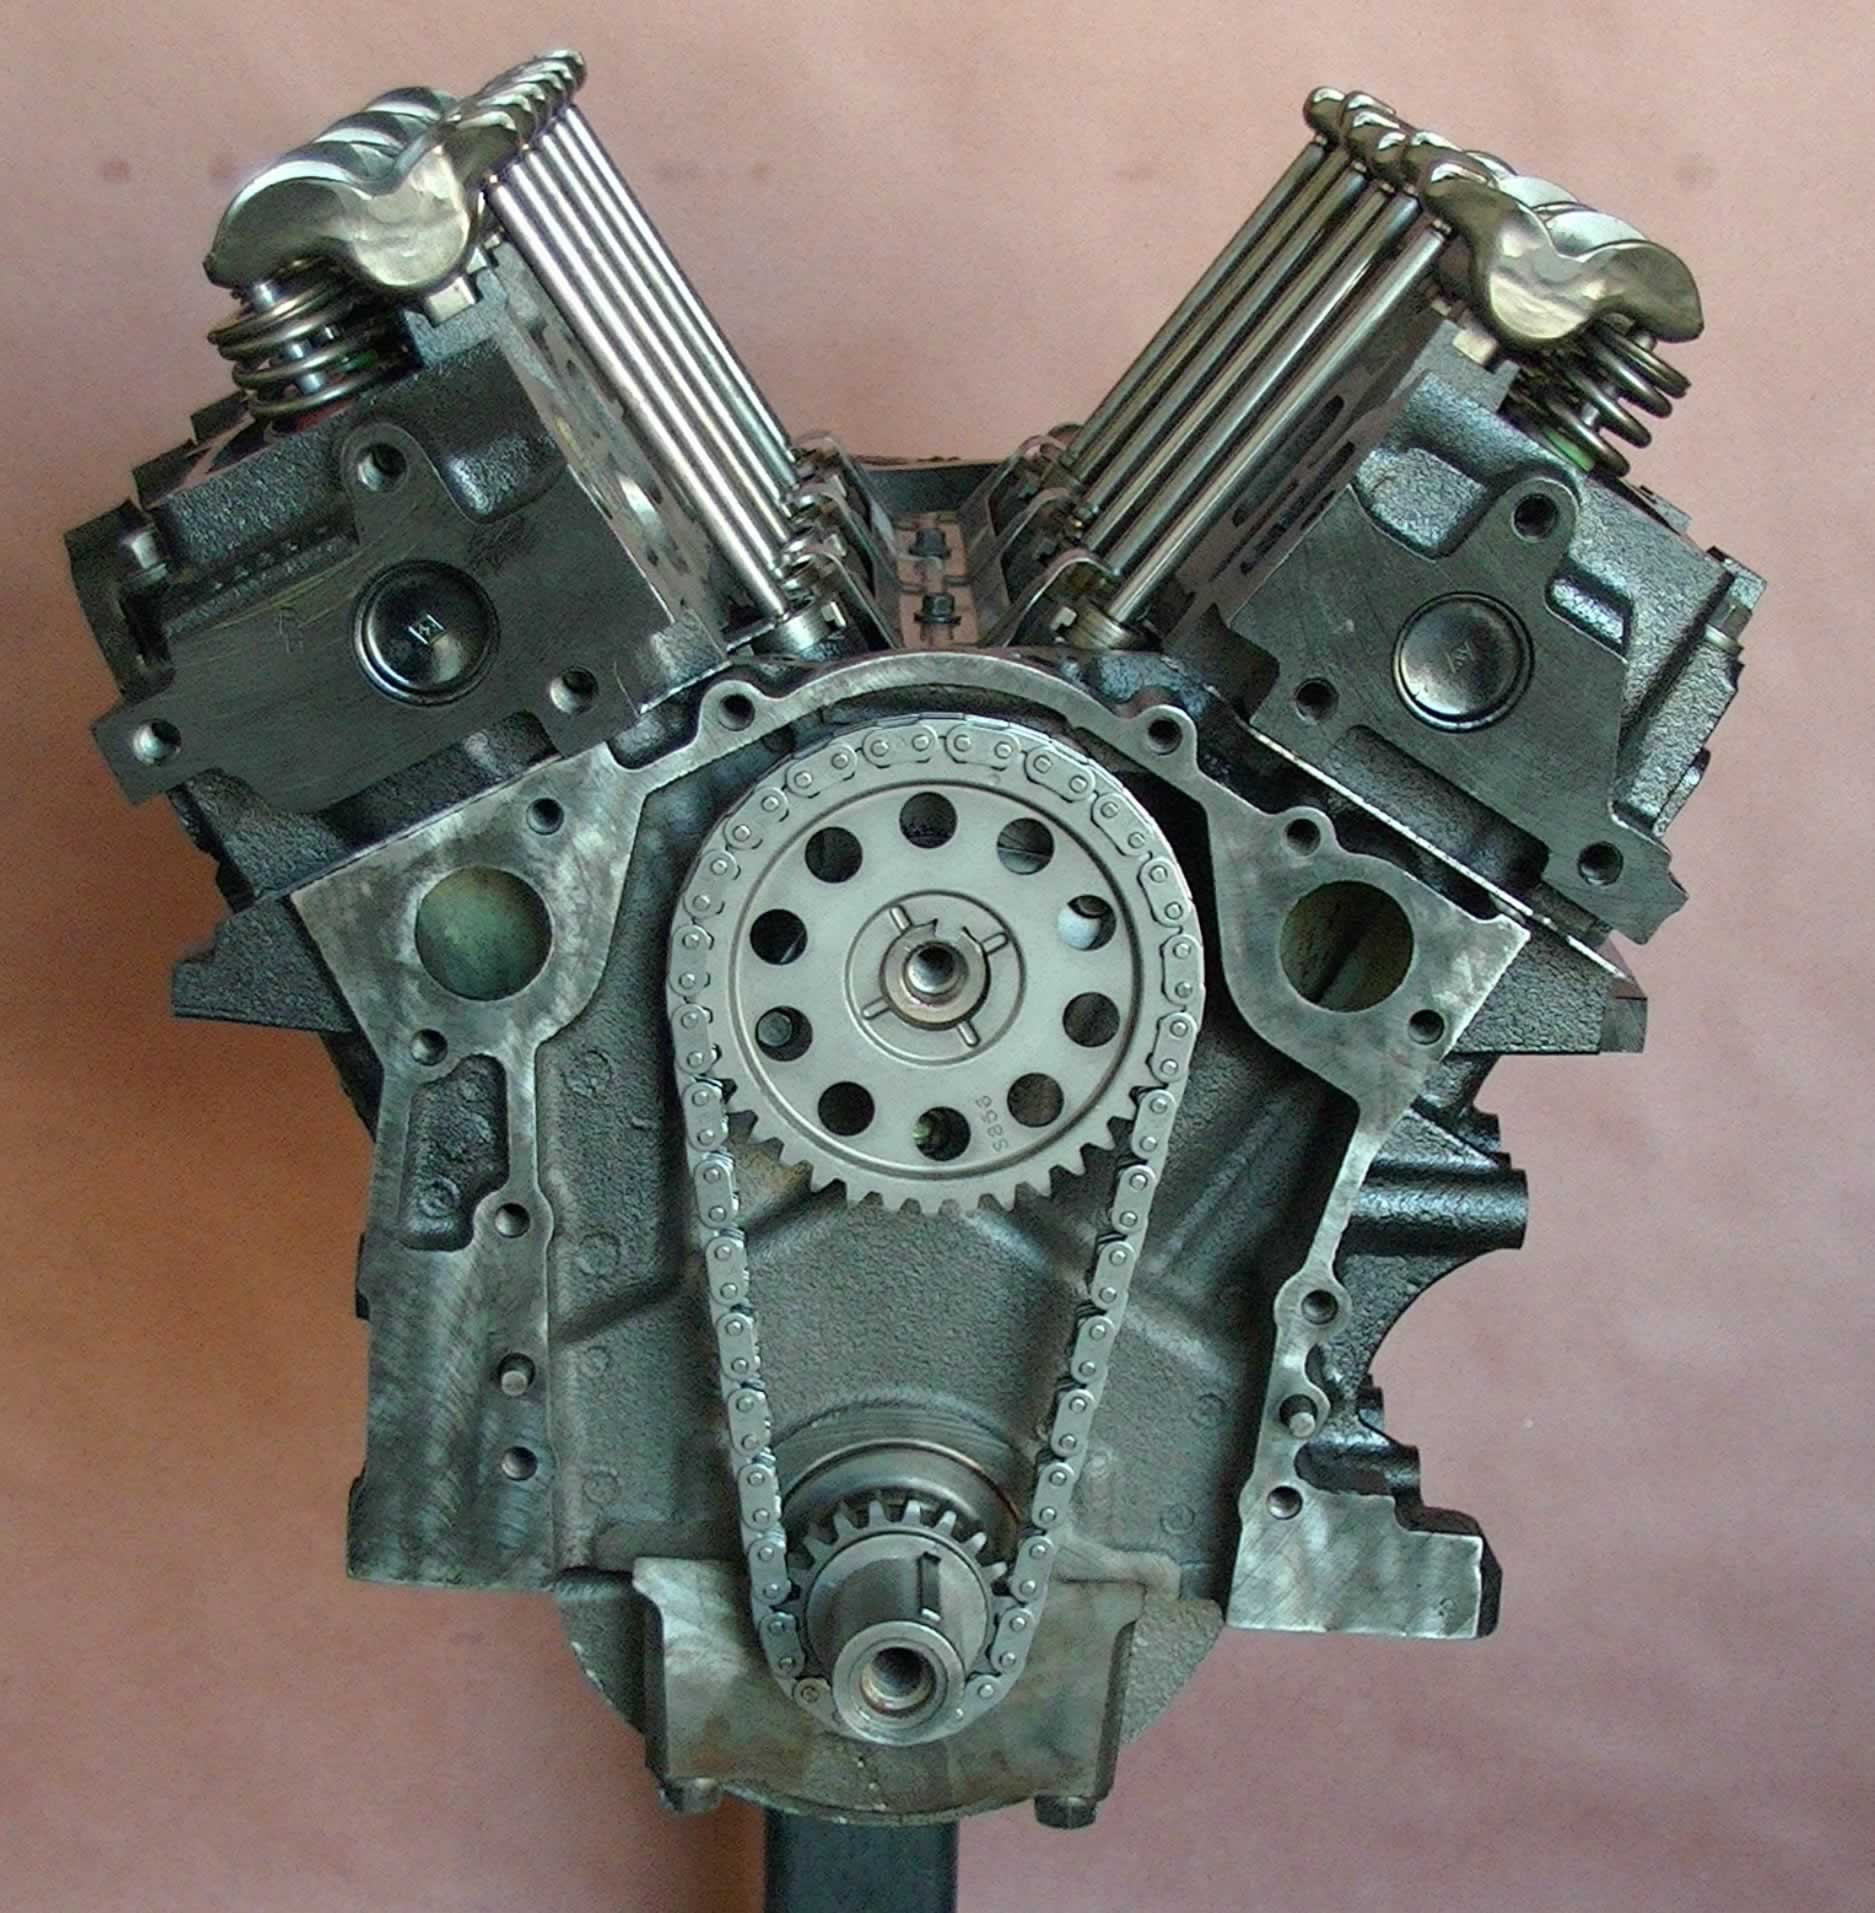 Remanufactured 3.0 Ford Ranger Engine